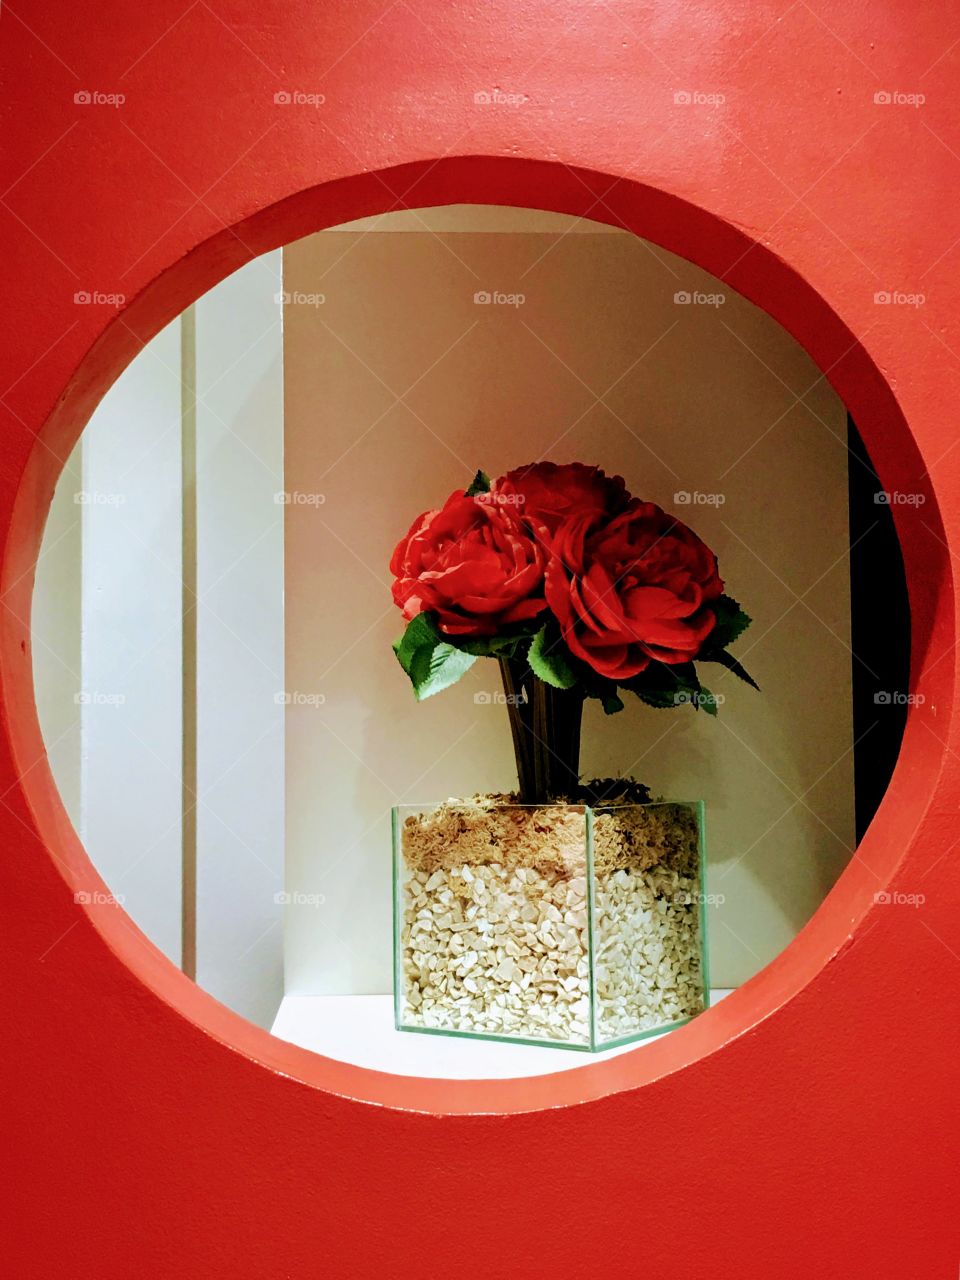 Red decorative flower on a circular shelf